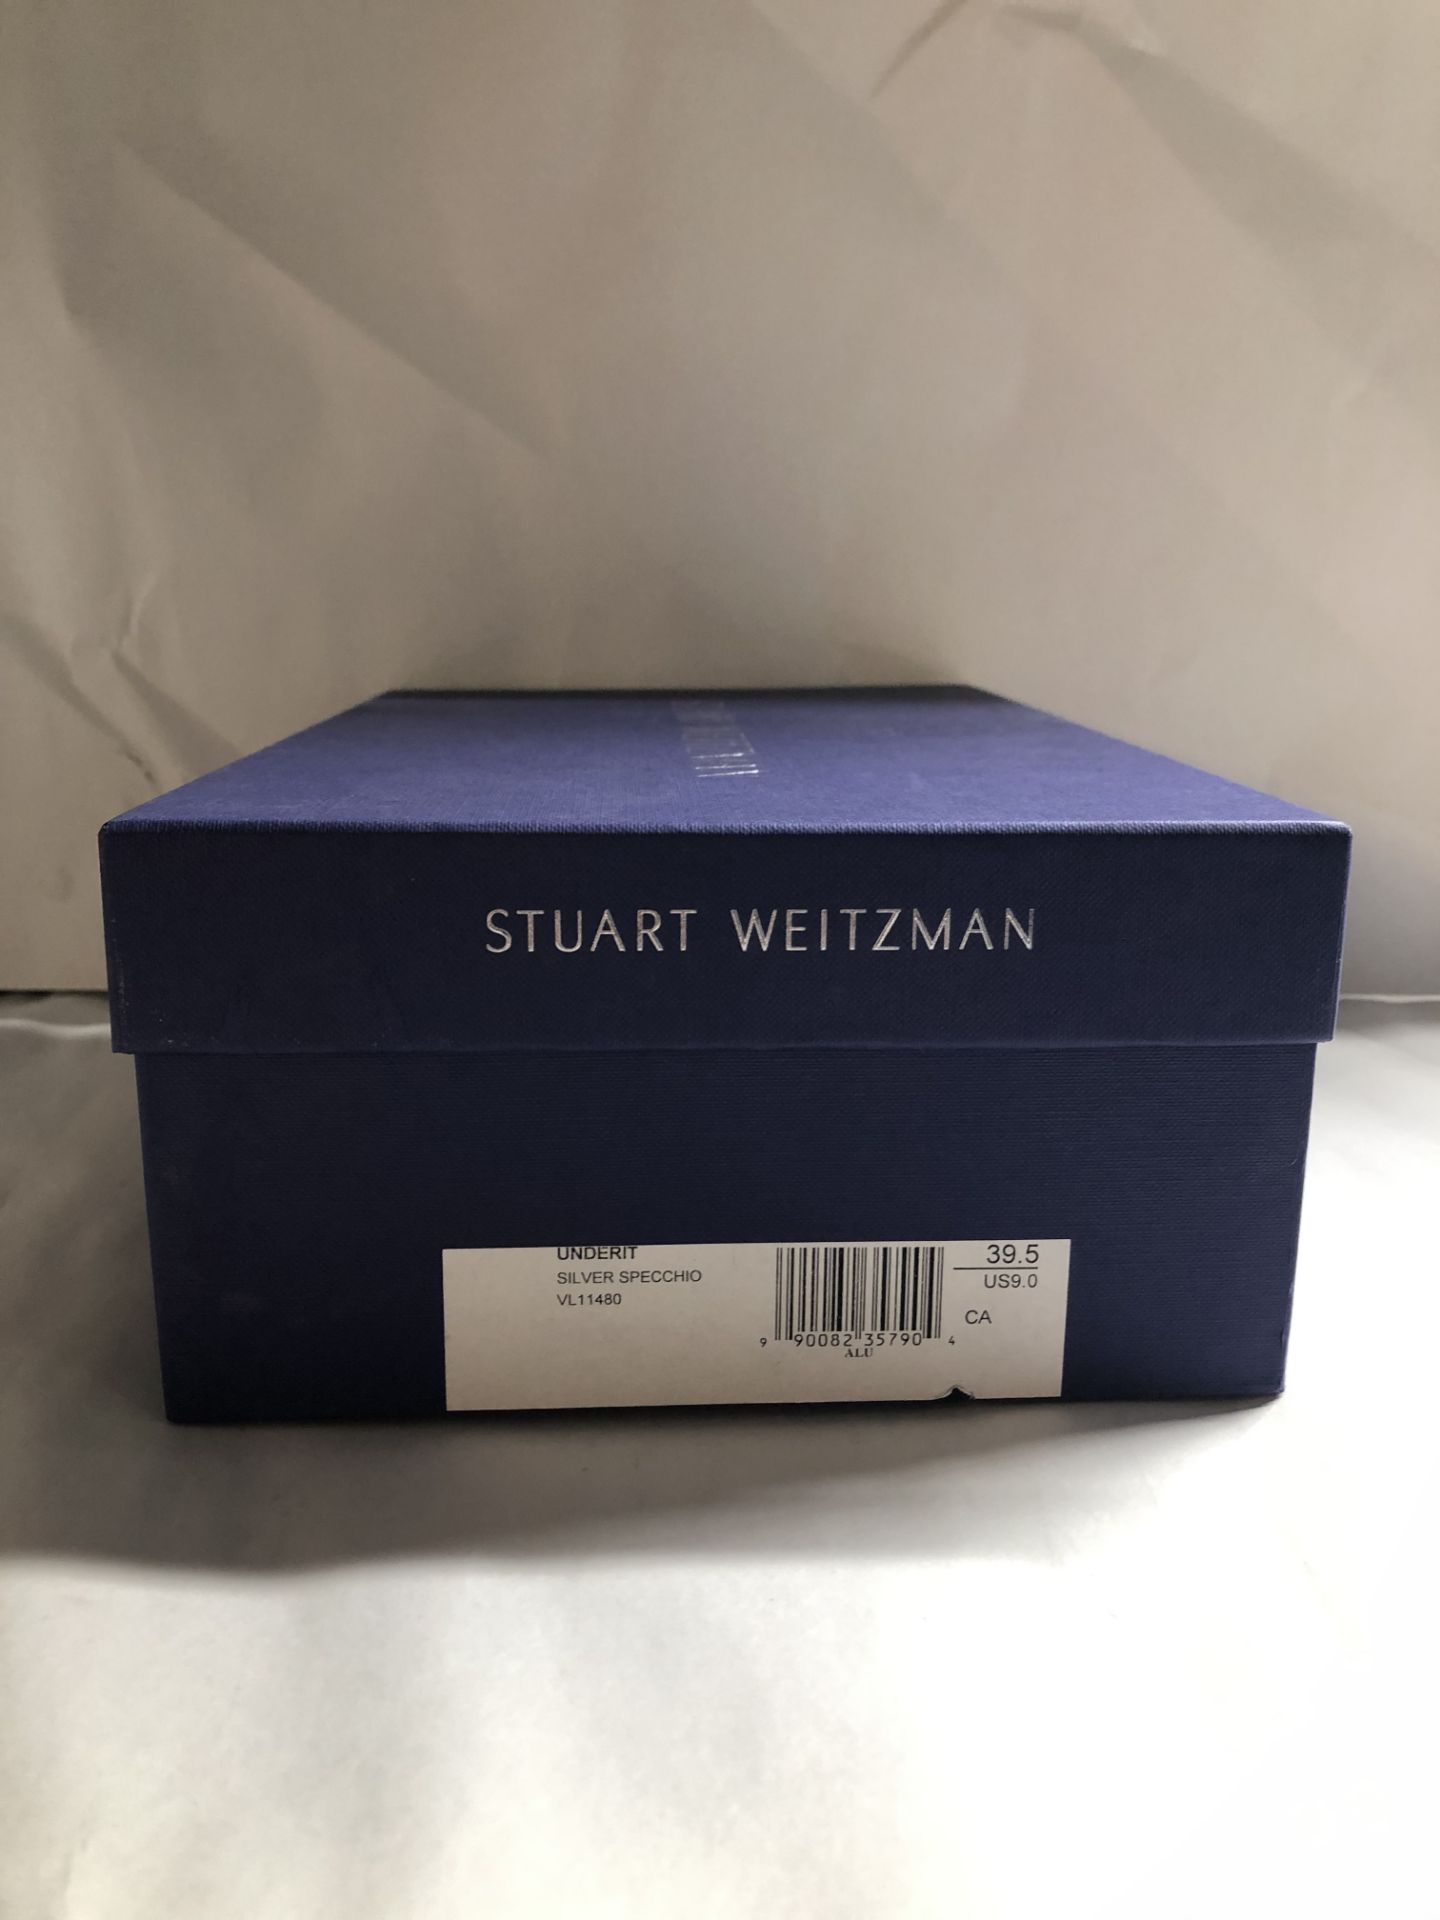 Stuart Weitzman Underit Silver Specchio Heels. EU 39.5 RRP £260.00 - Image 2 of 2